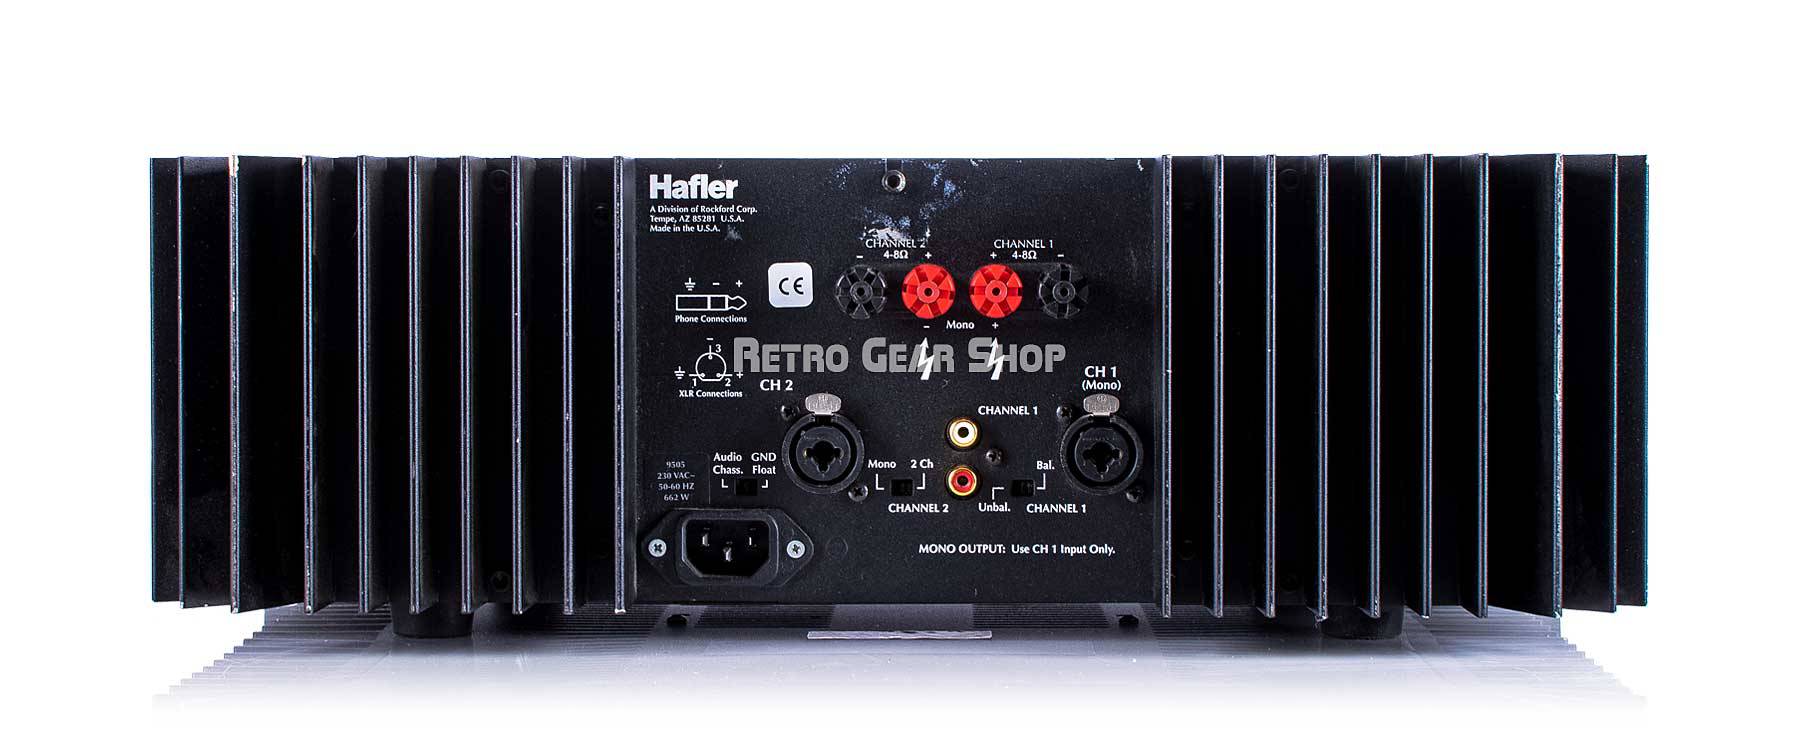 Hafler Series 9505